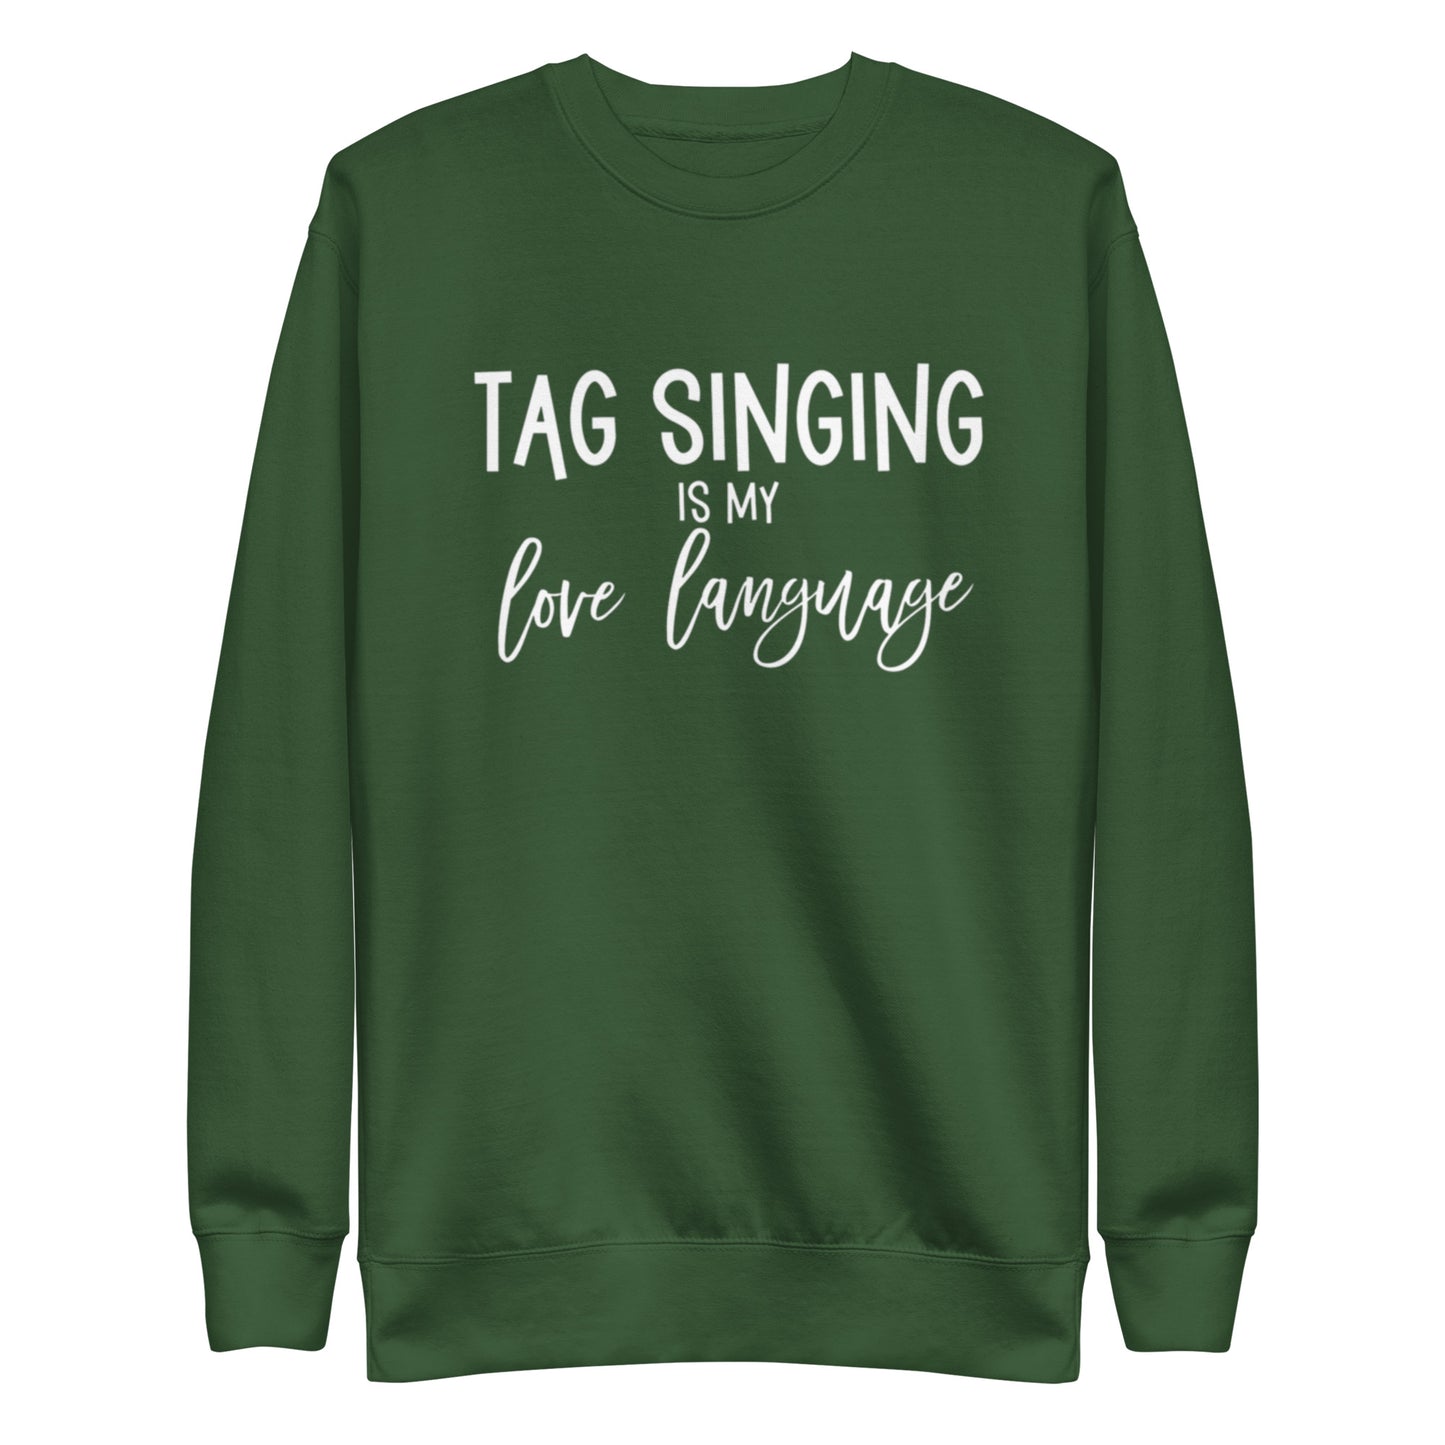 Tag singing is my love language - Unisex Premium Sweatshirt